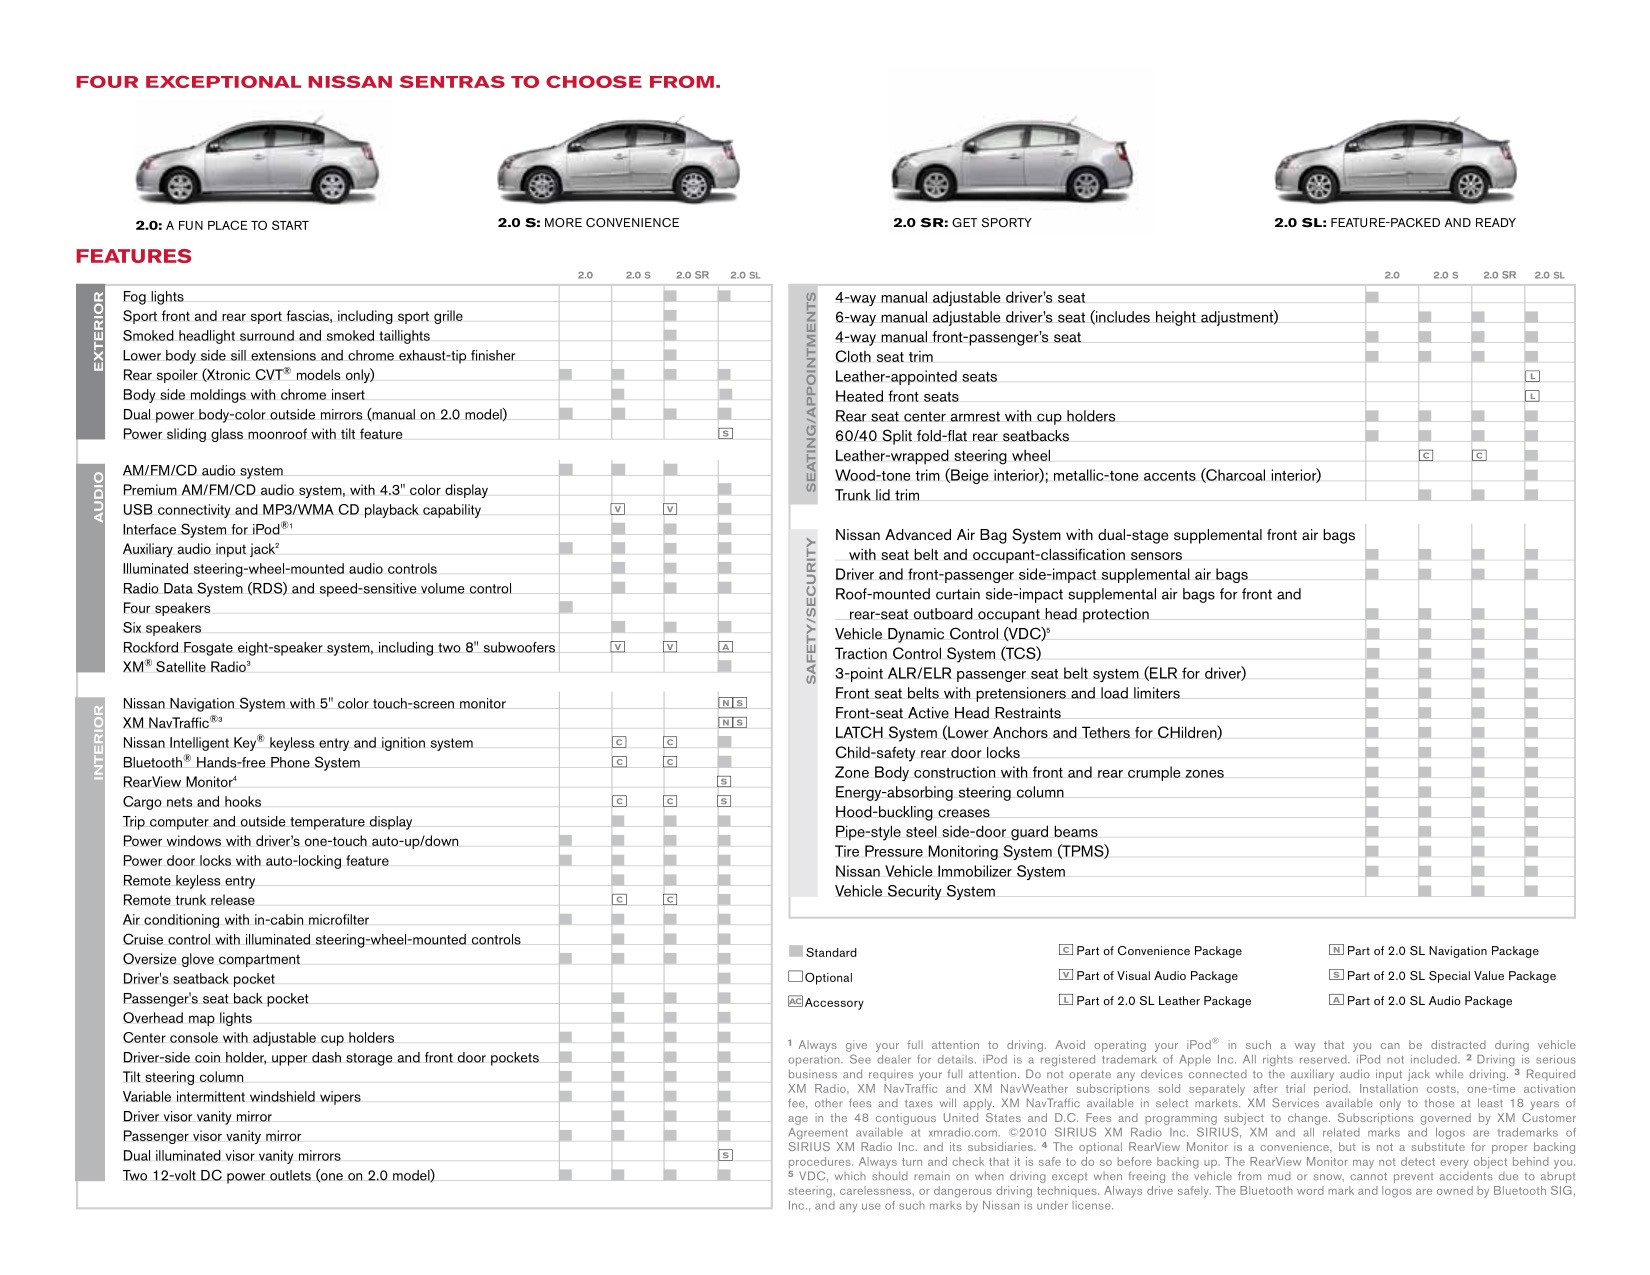 2011 Nissan Sentra Brochure Page 1